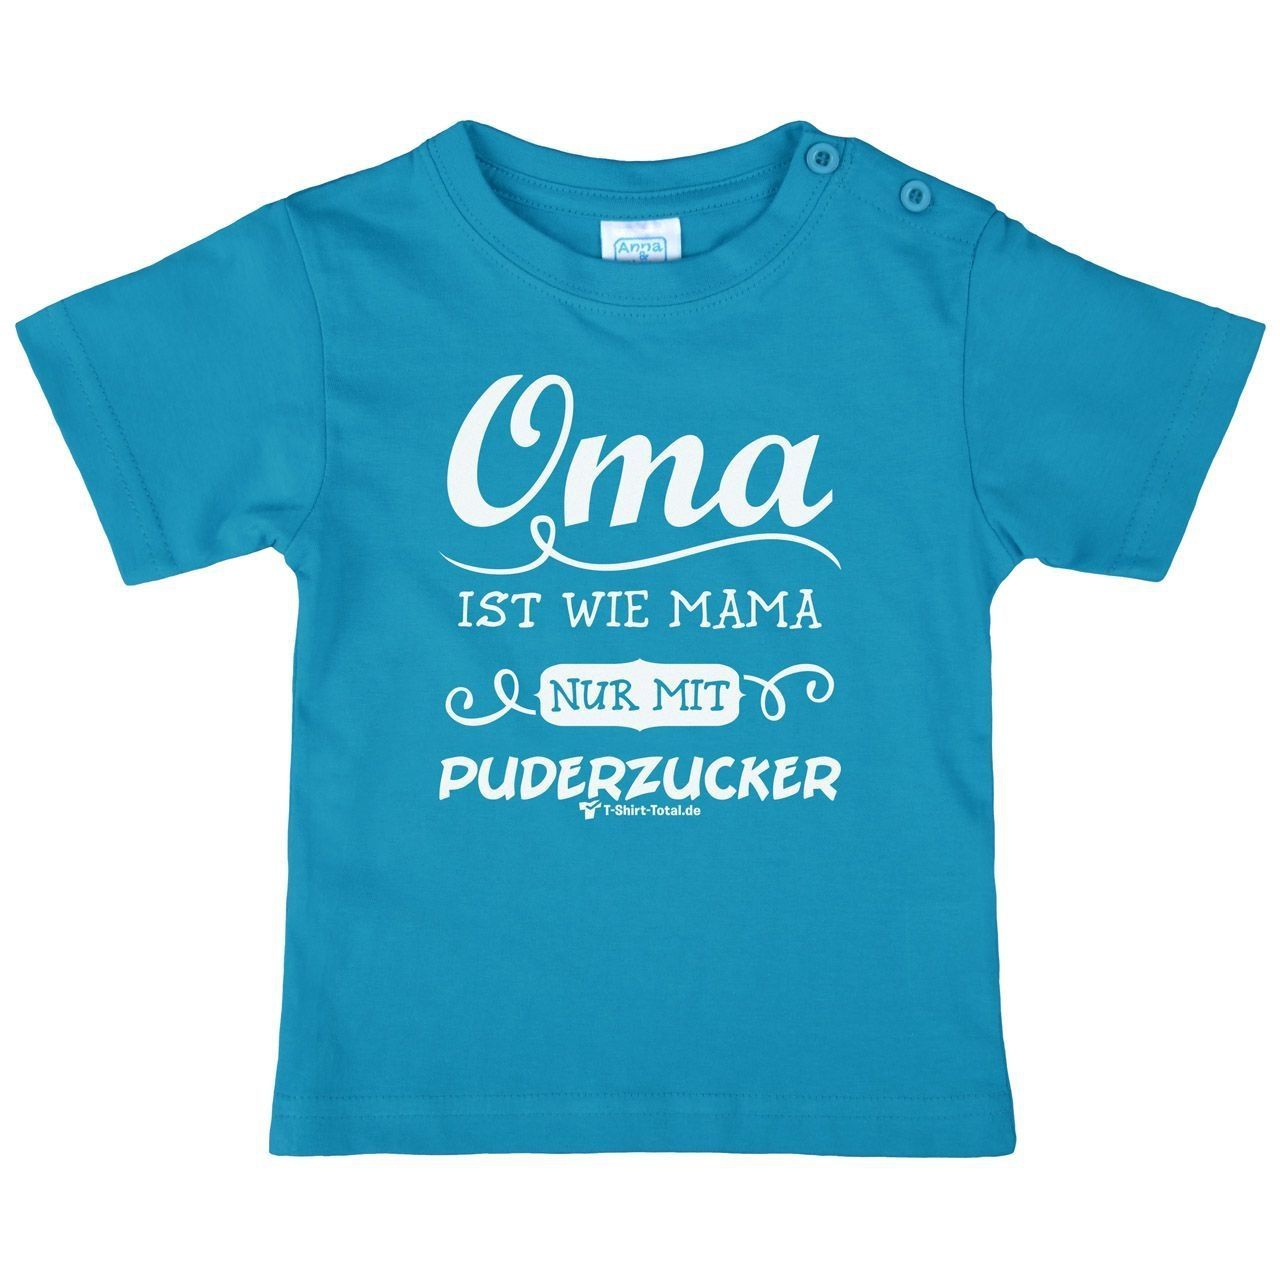 Oma Puderzucker Kinder T-Shirt türkis 80 / 86